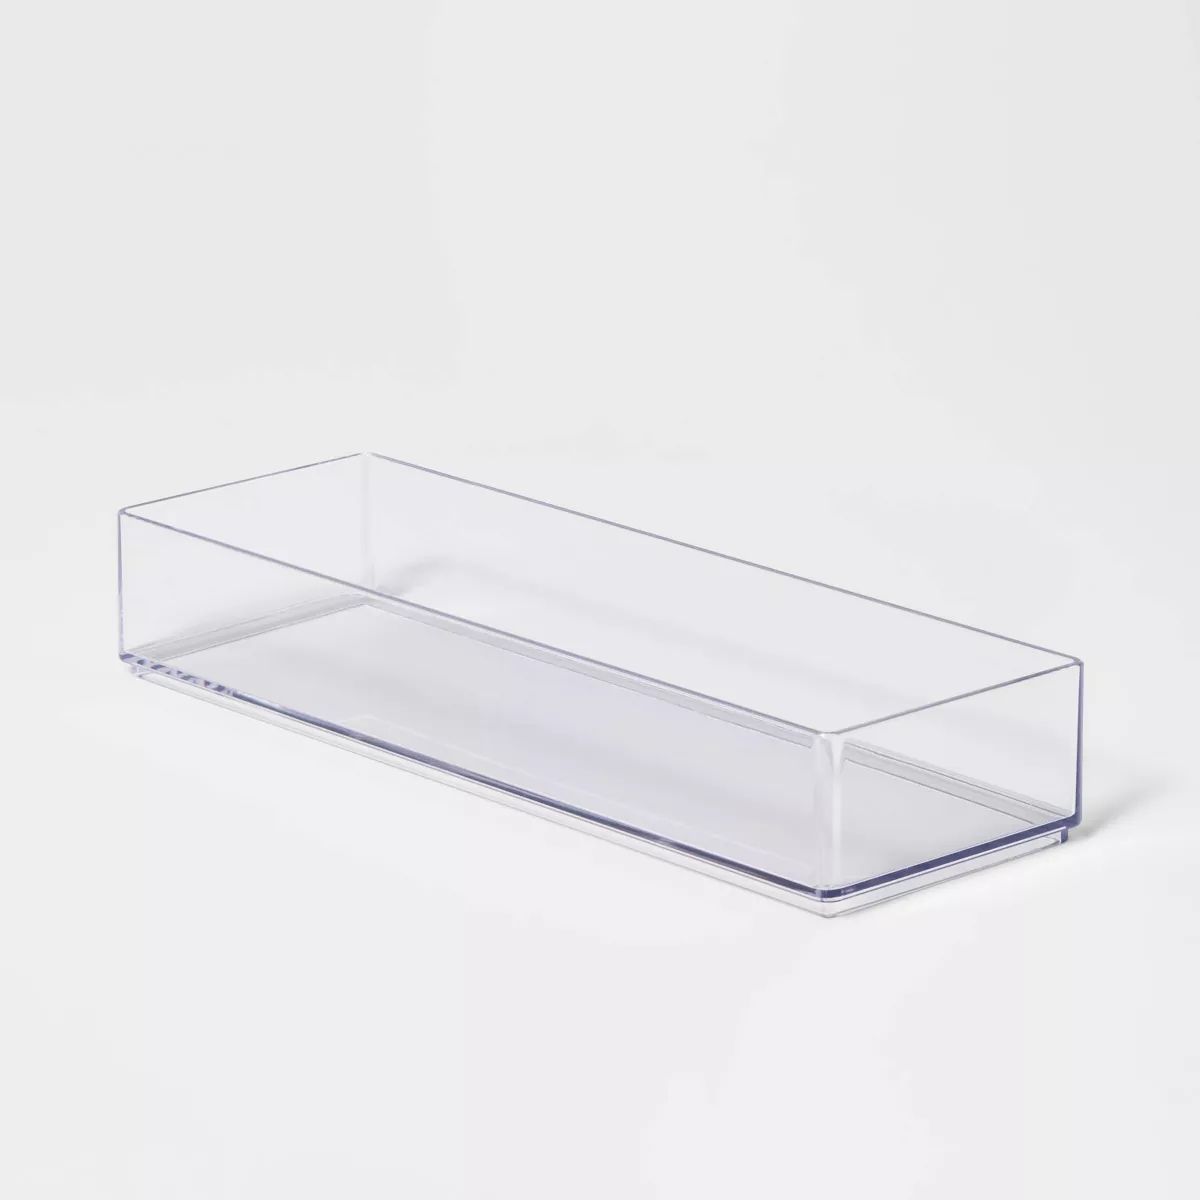 Large 12" x 8" x 2" Plastic Organizer Tray Clear - Brightroom™ | Target